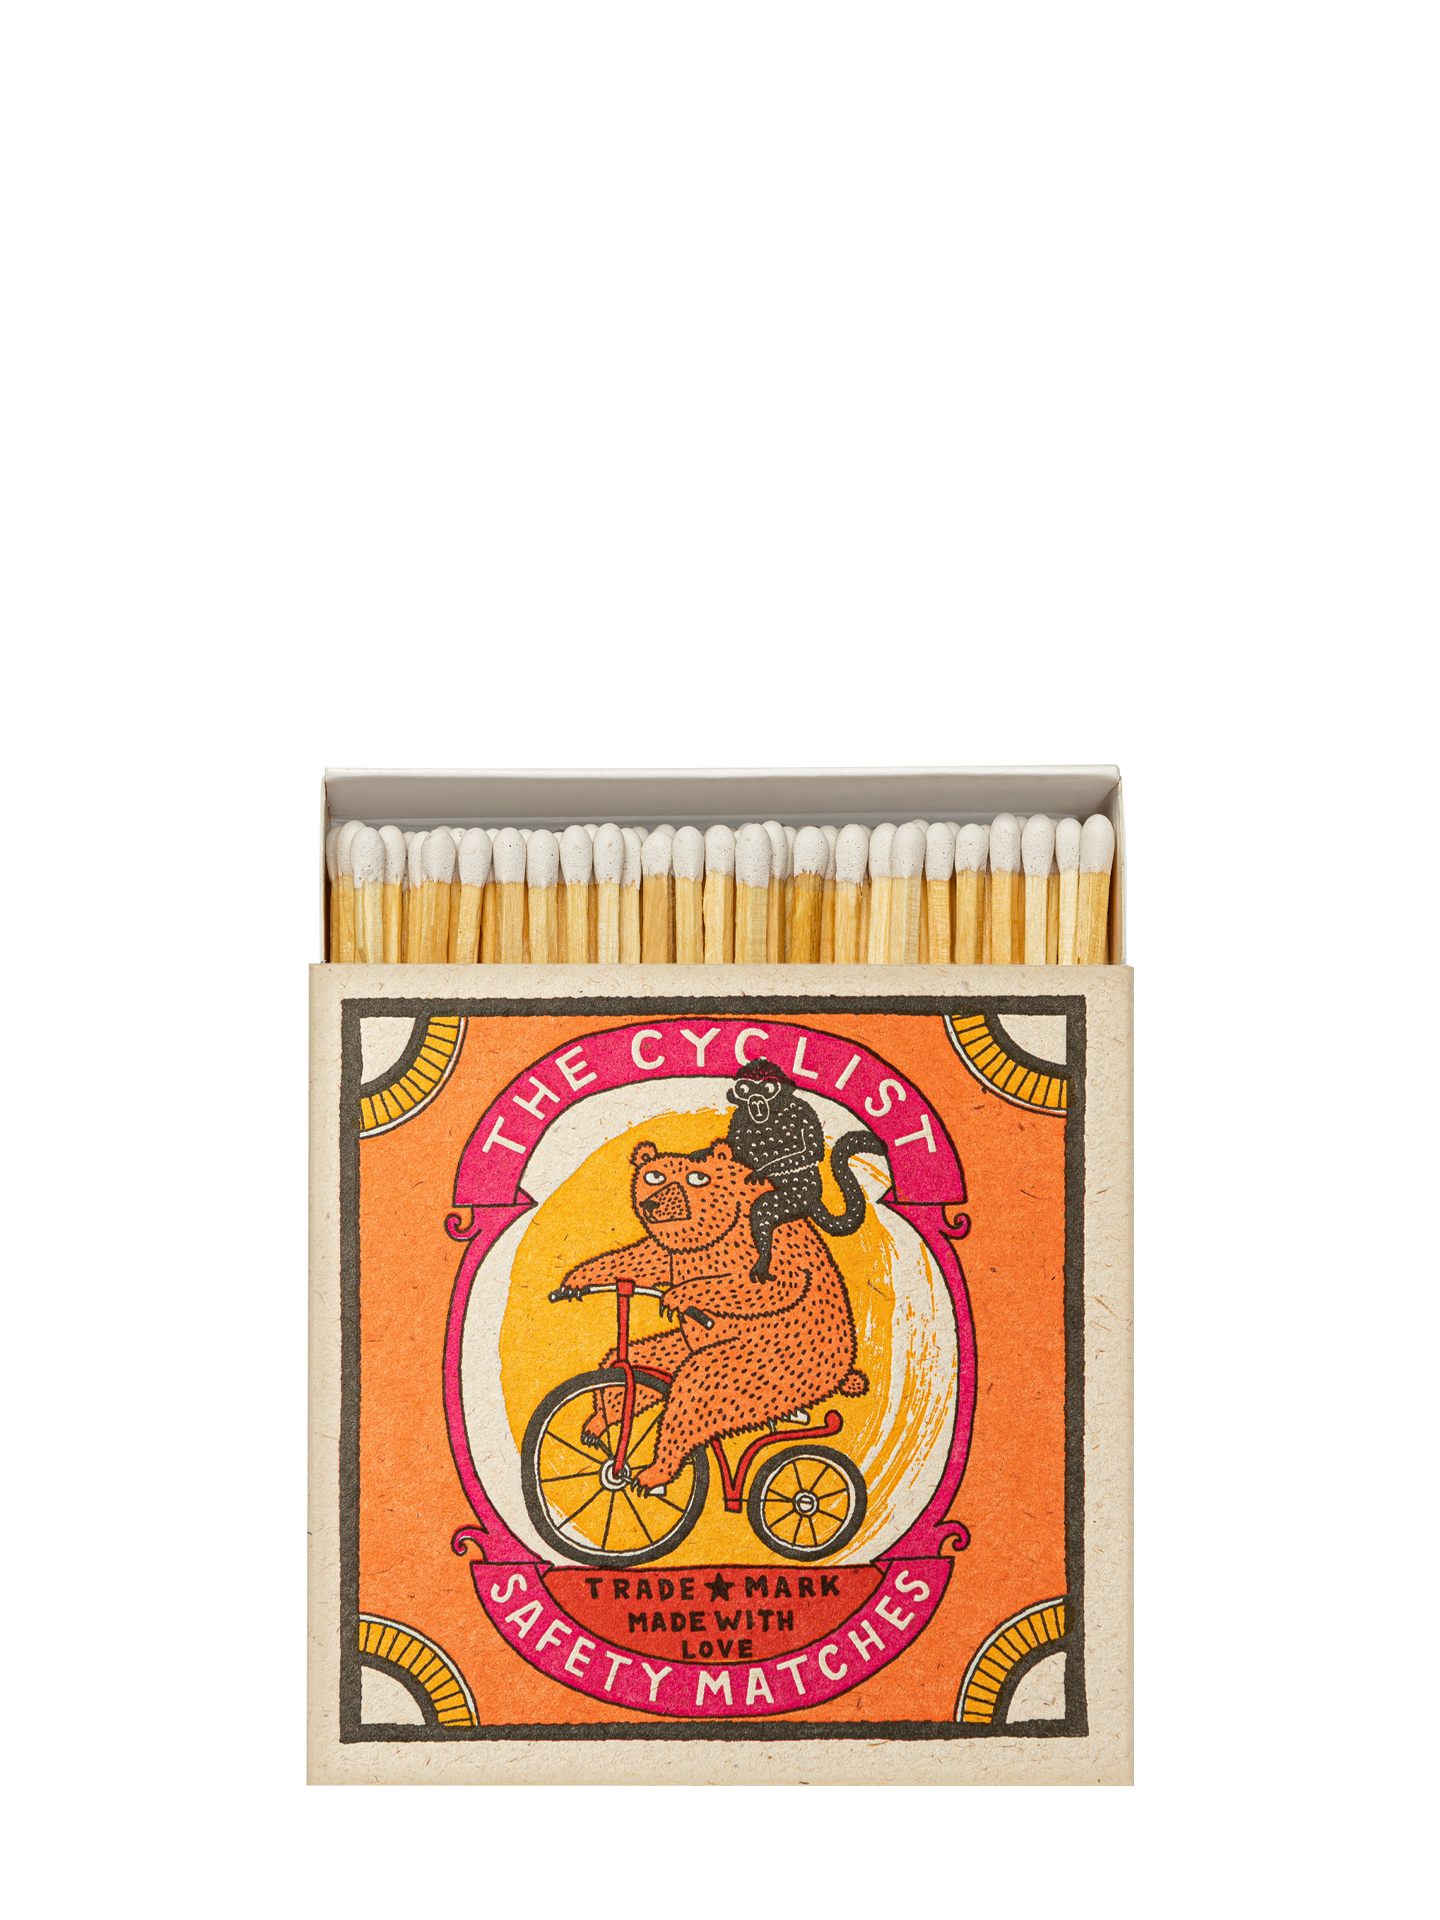 The Cyclist matchbox